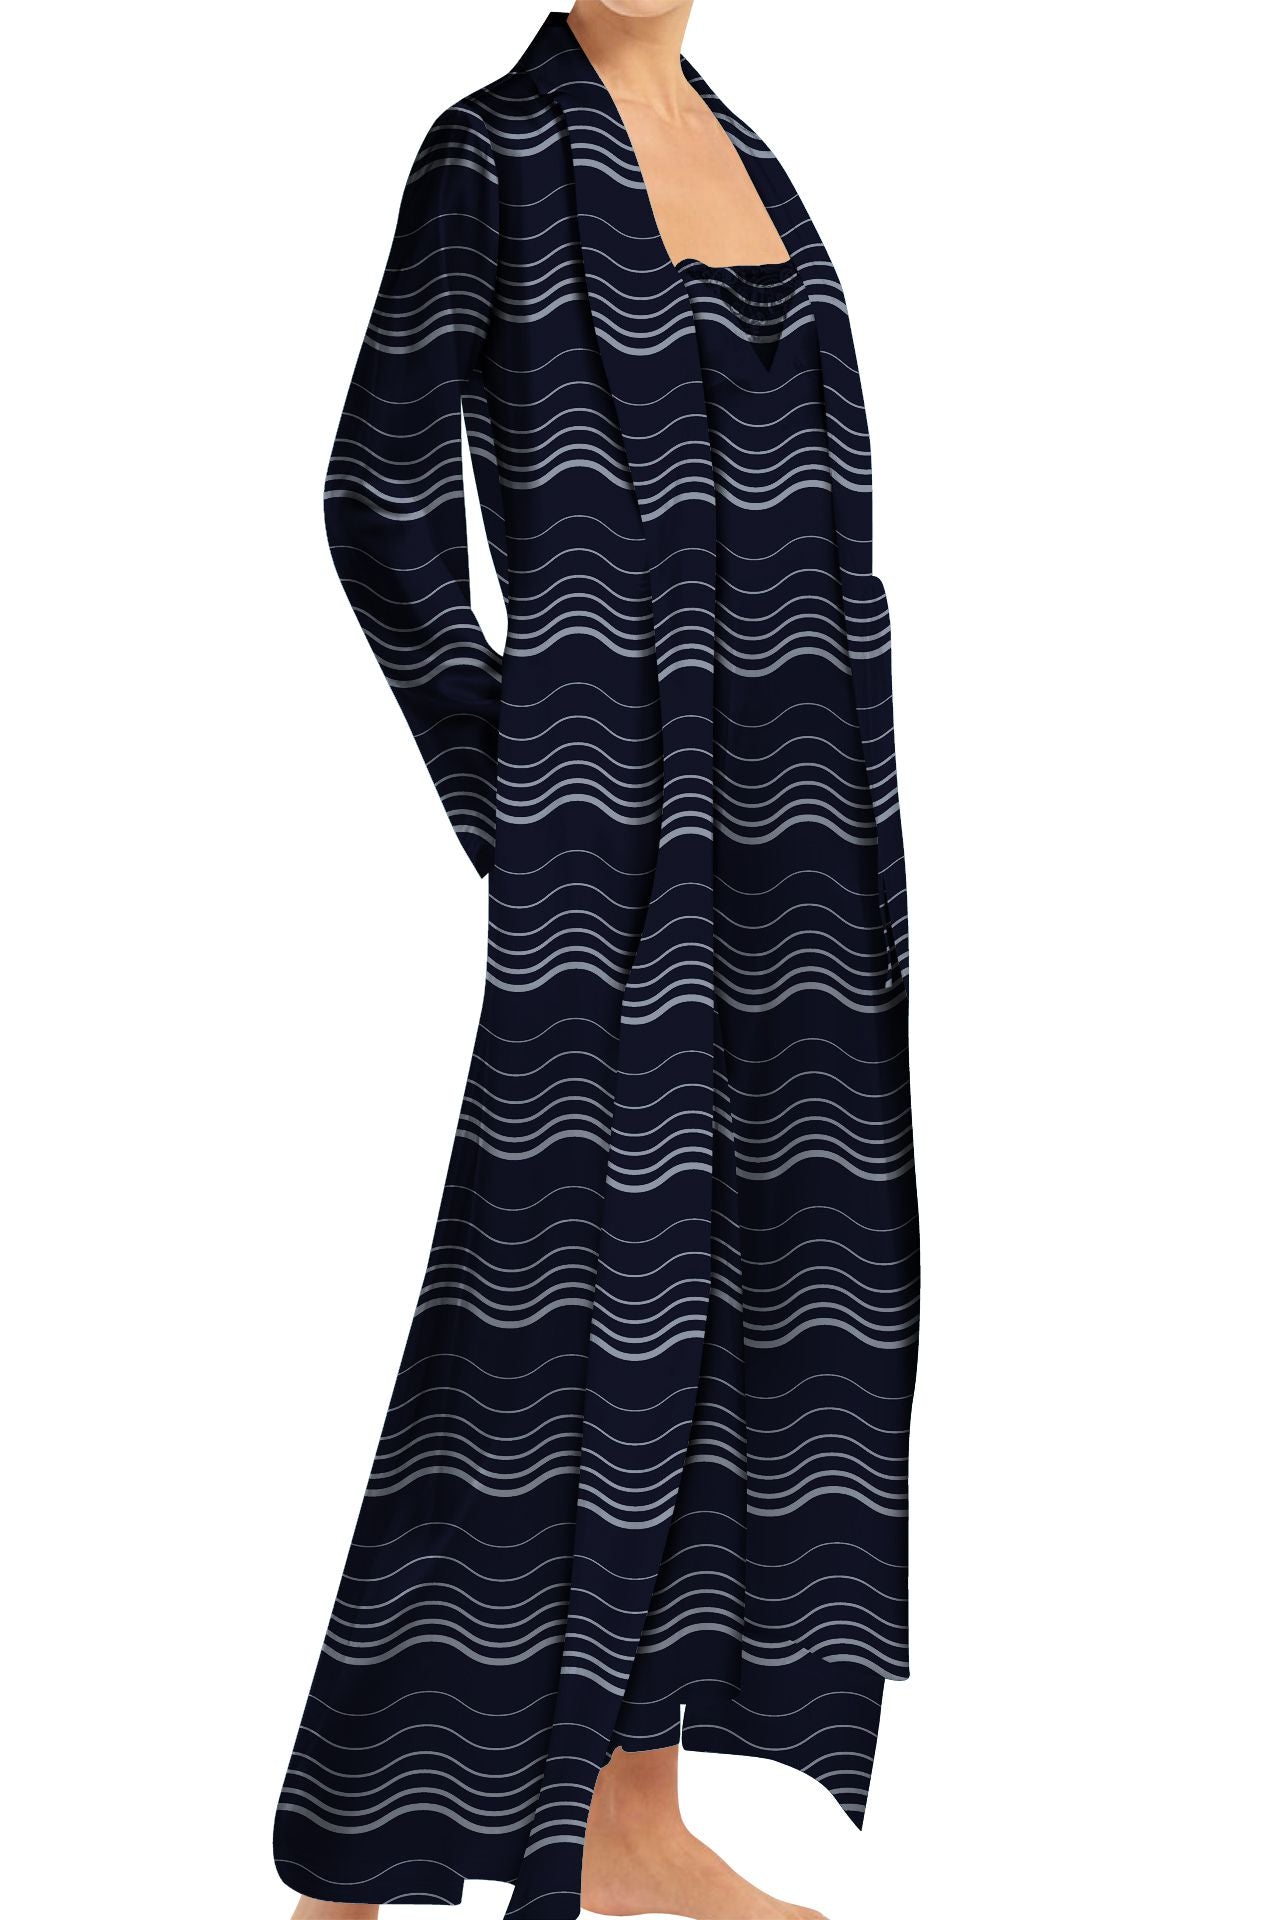 "long sleeve wrap dress" "maxi womens wrap dress" "Kyle X Shahida" "silk wrap maxi dress"